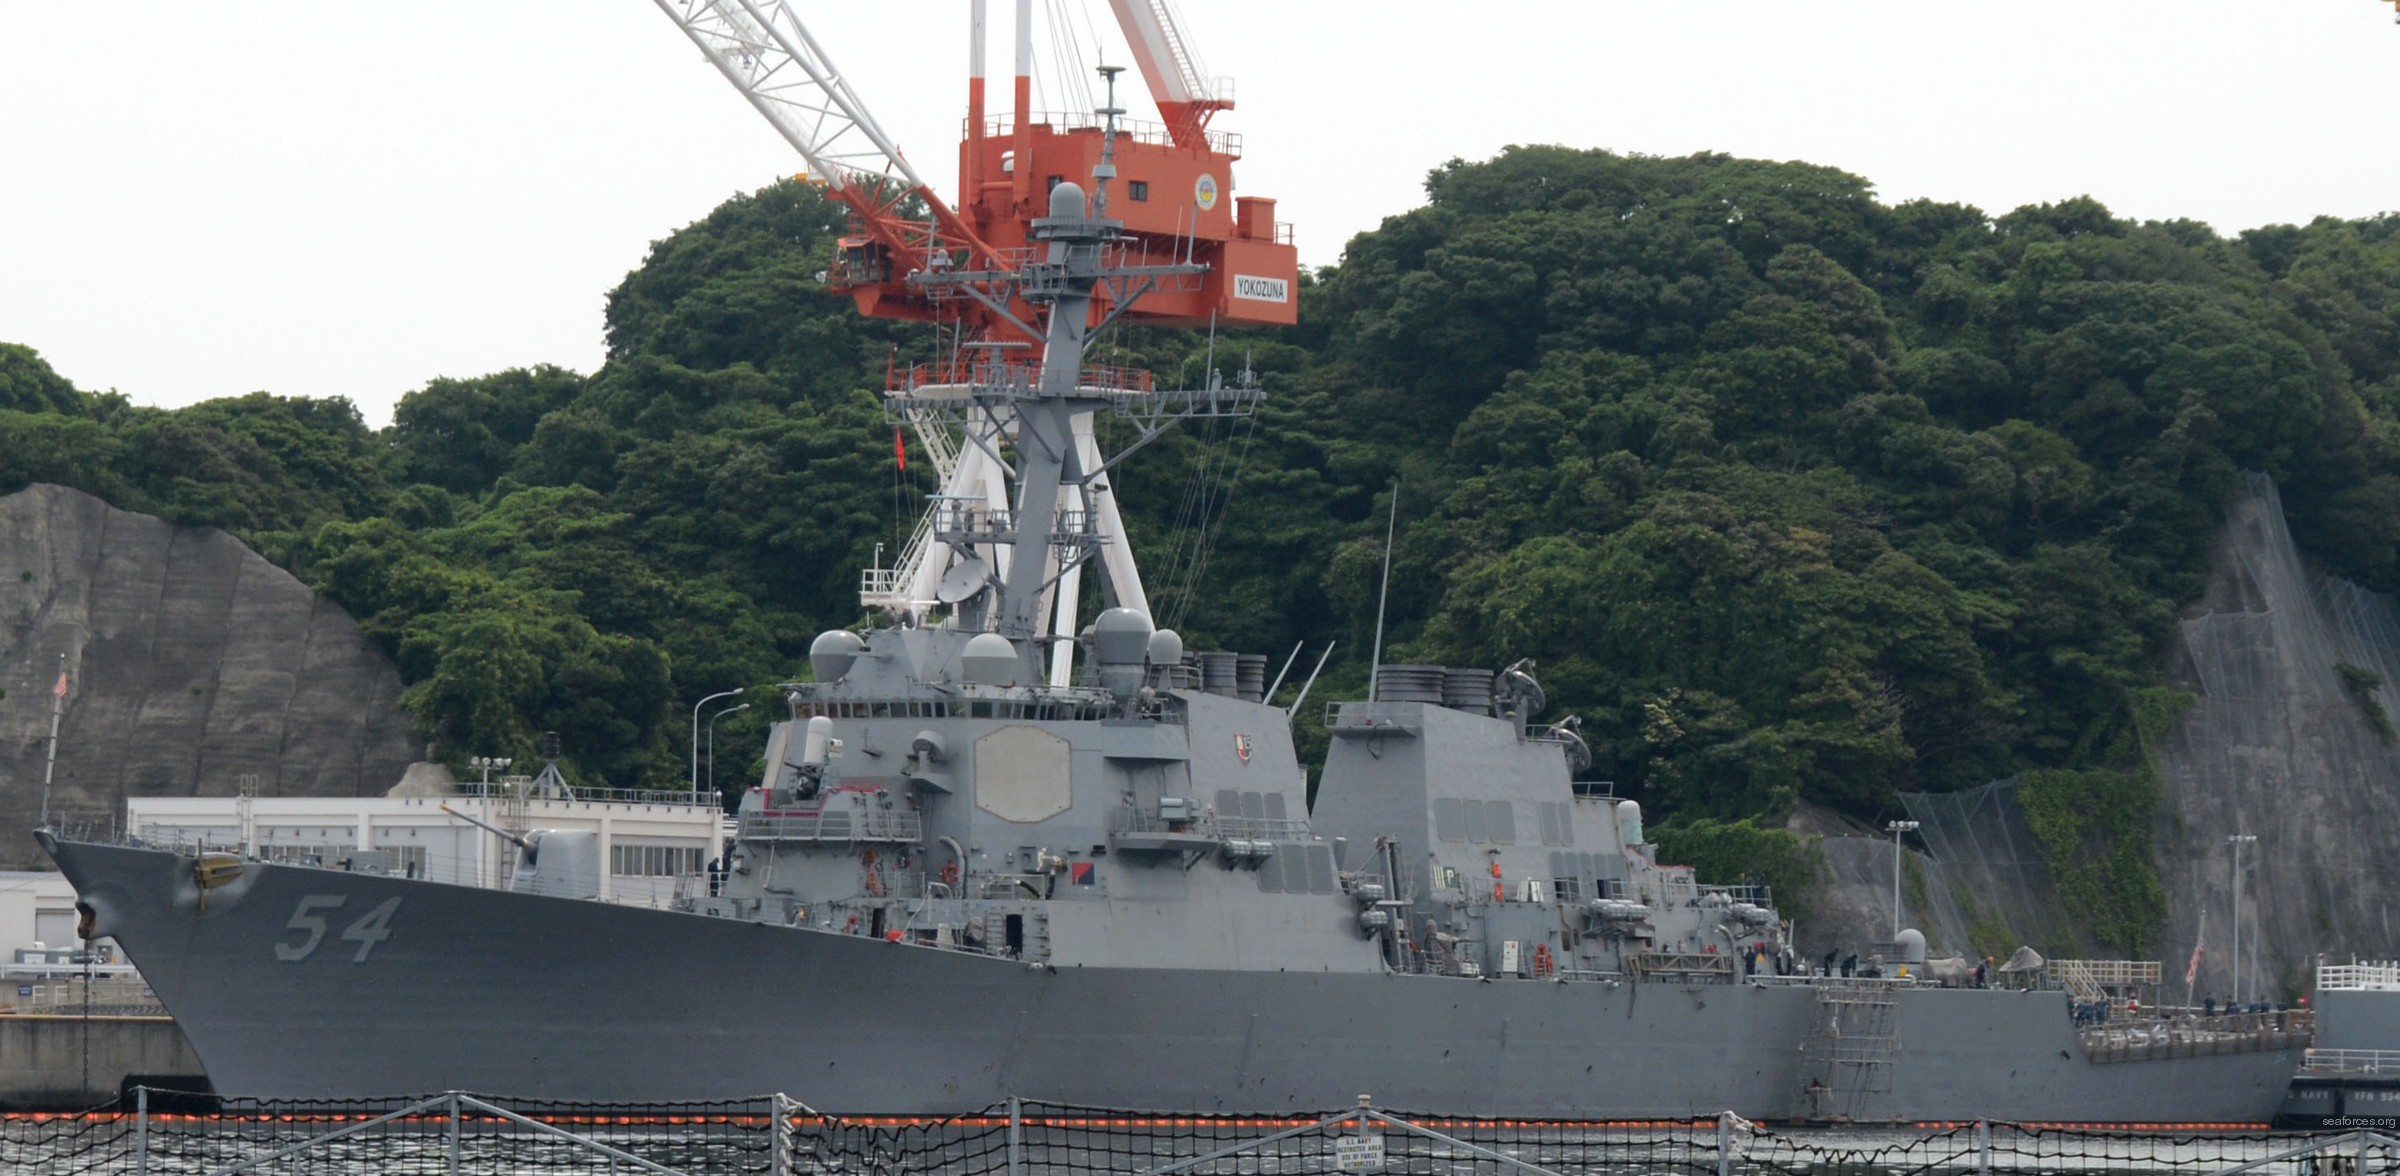 ddg-54 uss curtis wilbur destroyer us navy 131 yokosuka japan